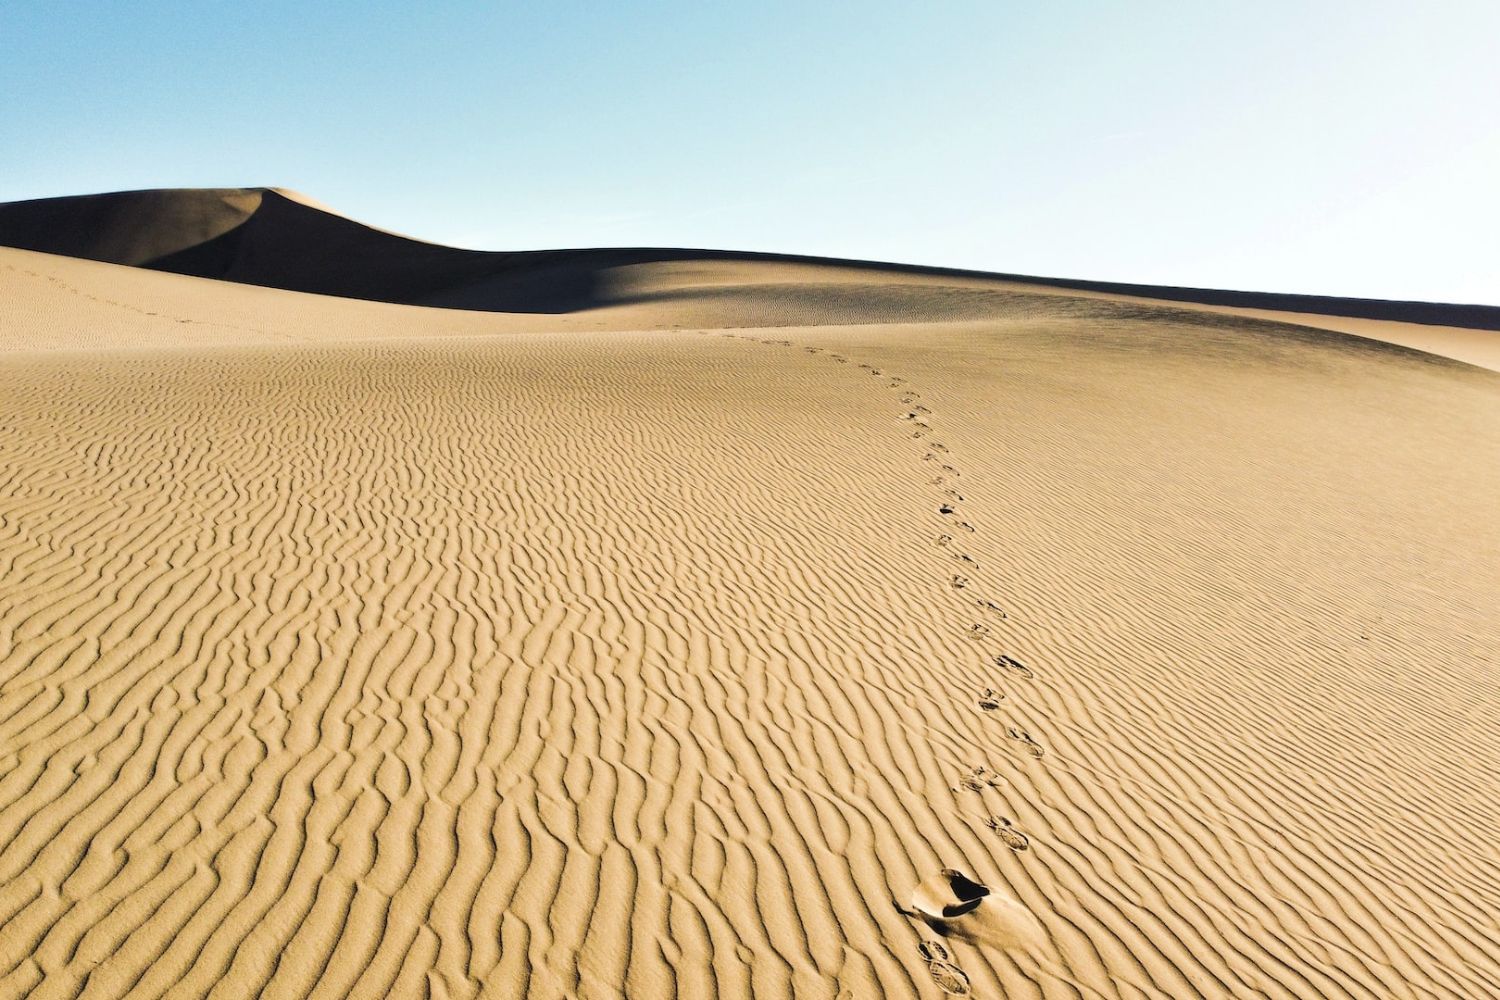 vast and stunning desert with a  line of footprint  by Brian Wangenheim on Unsplash